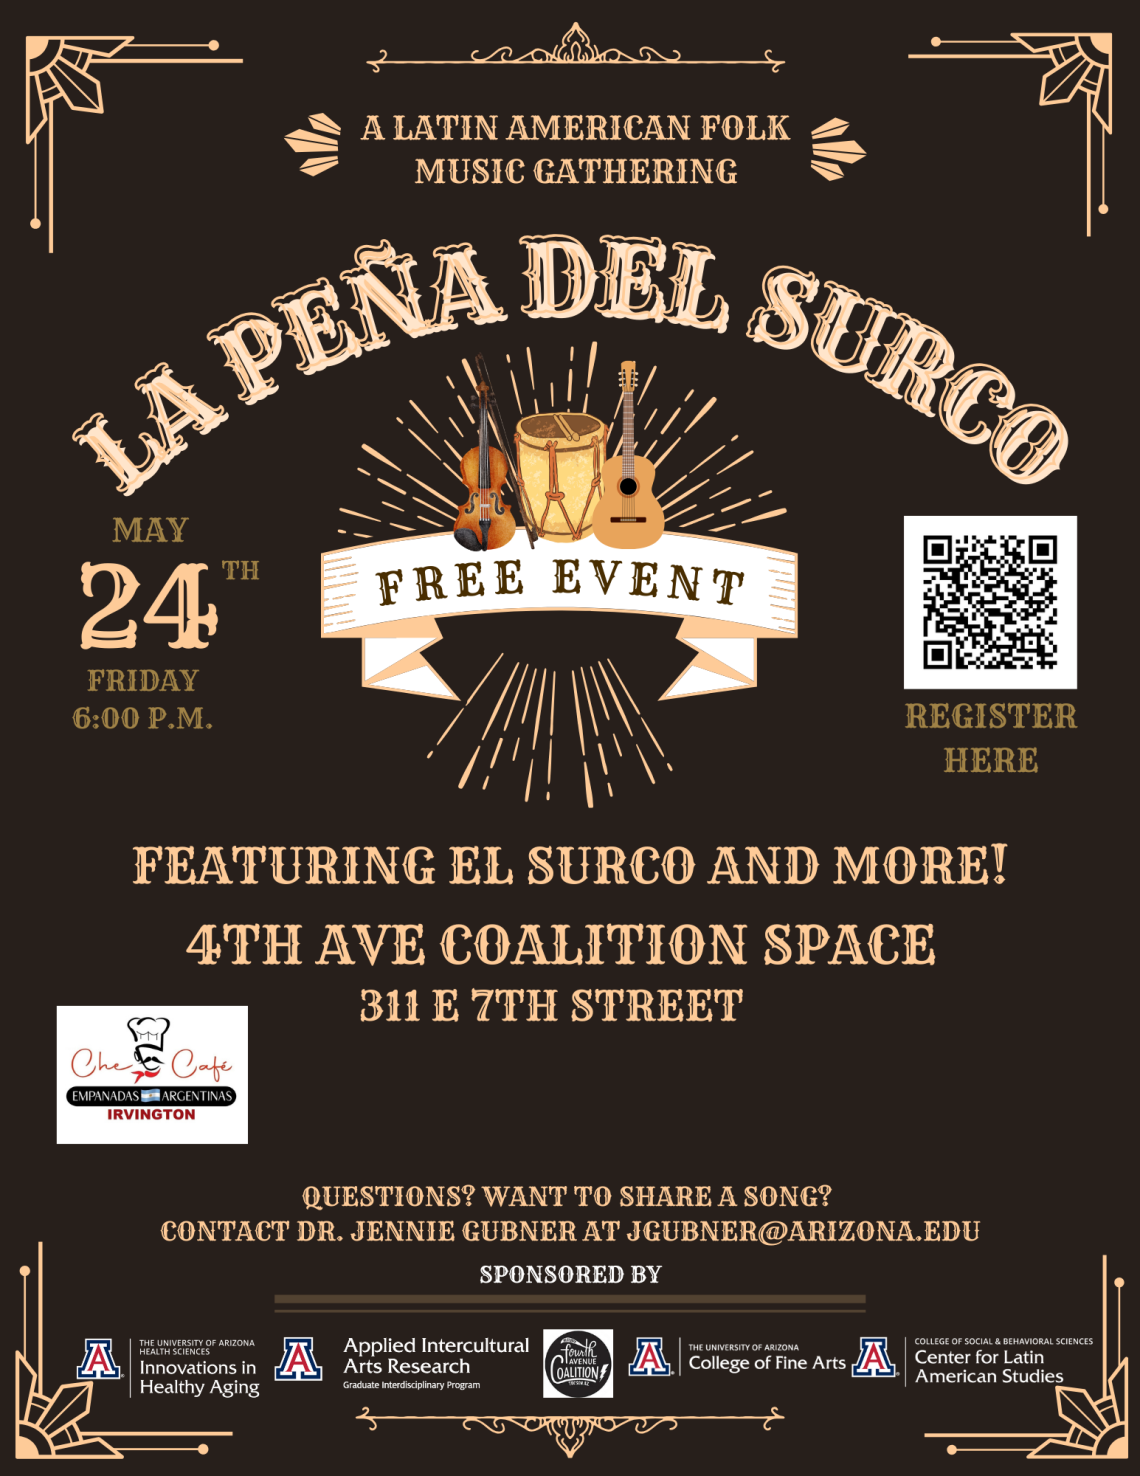 La Peña del SurCo: A Latin American Folk Music Gathering